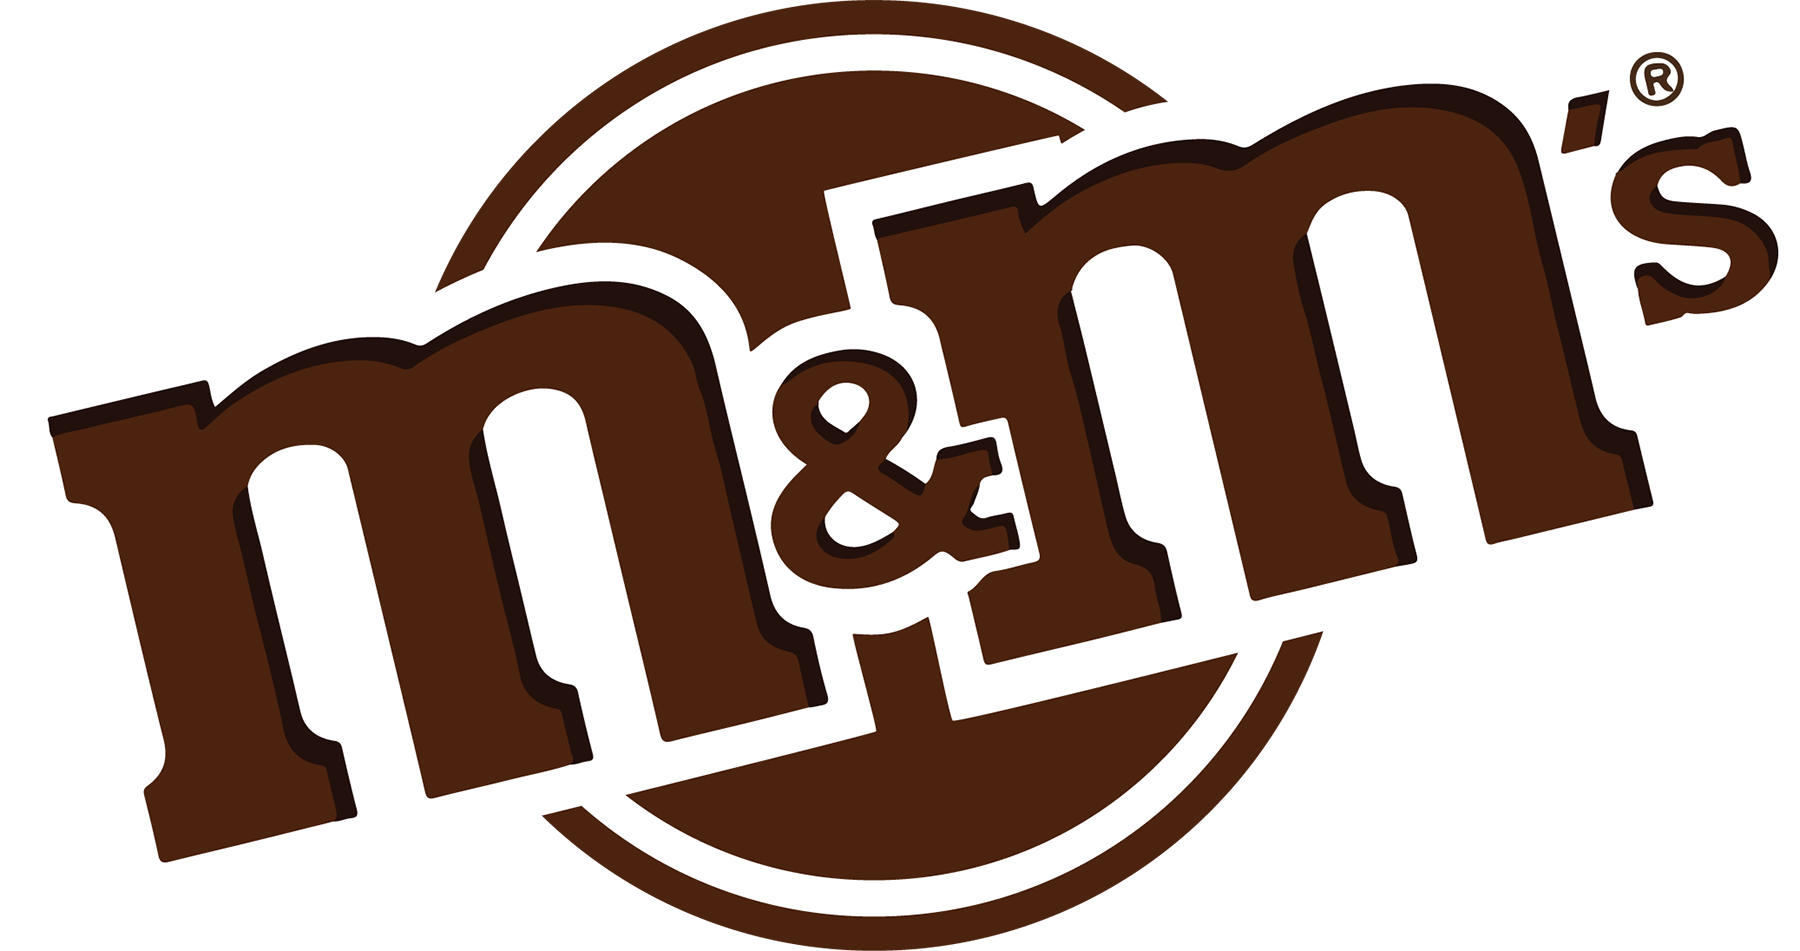 Имя мс. M&M логотип. Логотип ммдемс. Коричневый логотип. Коричневый m m's.